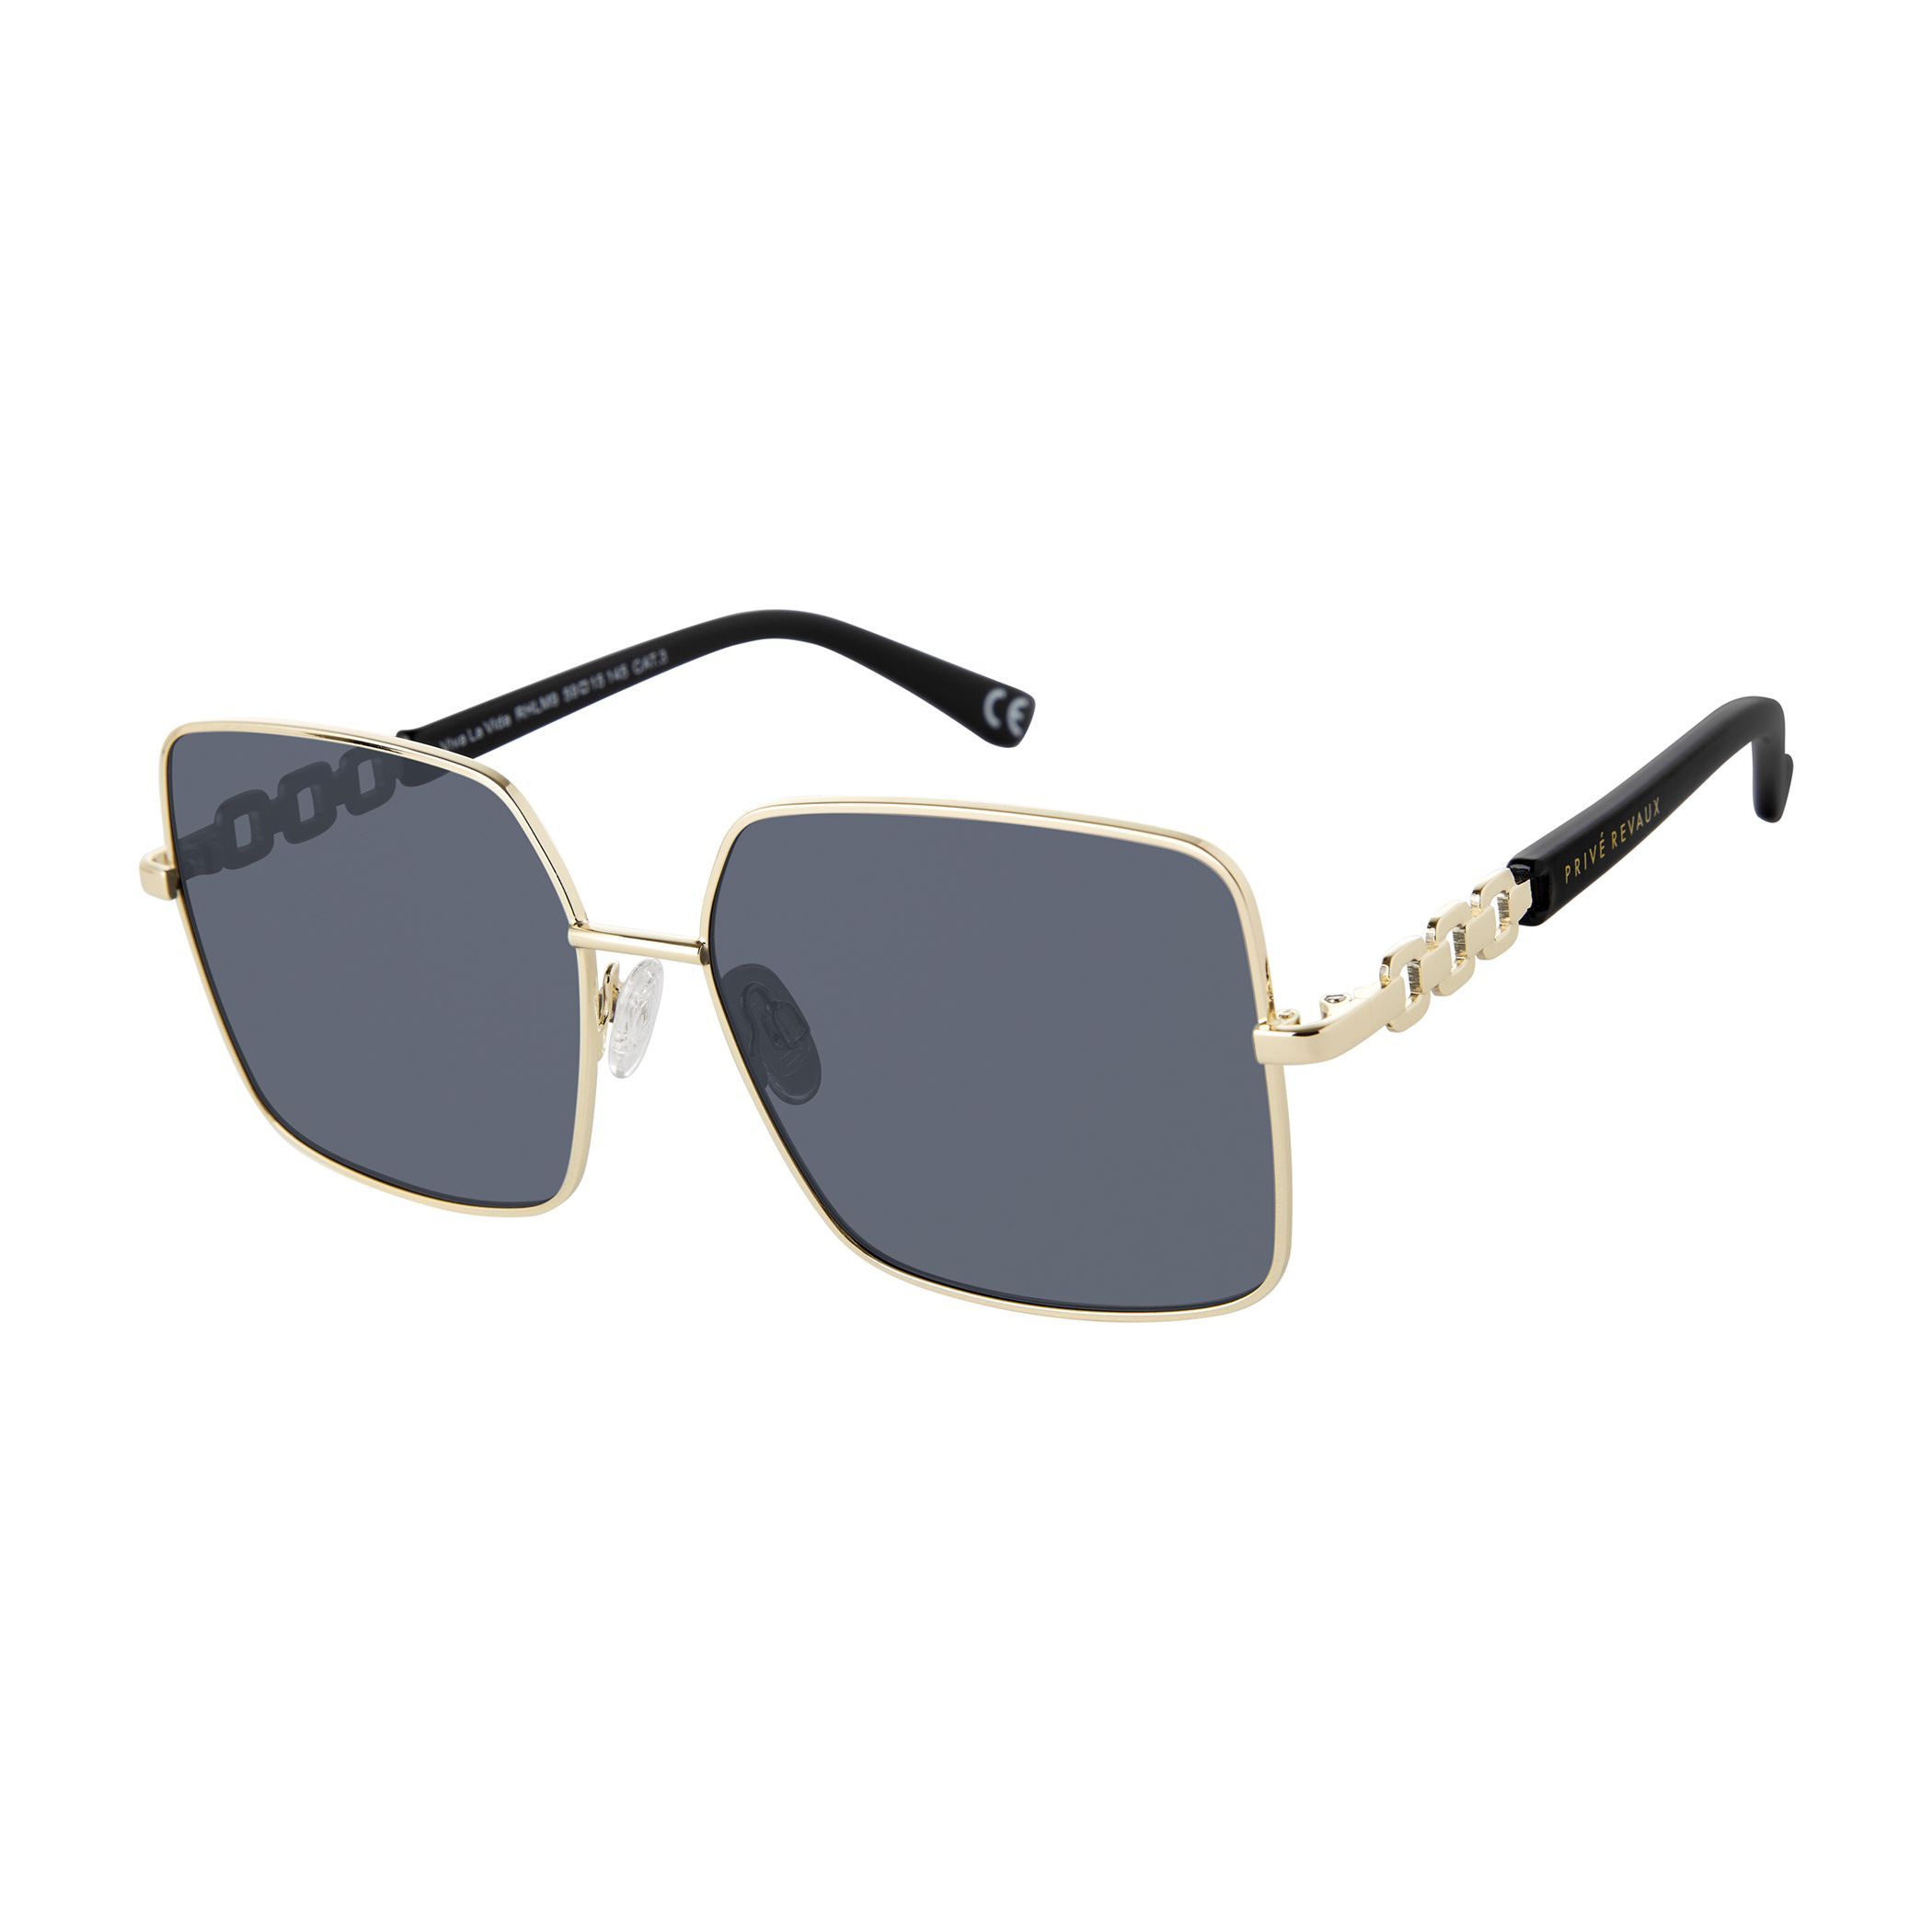 VIVA LA VIDA S Square Sunglasses RHL M9 - size 59